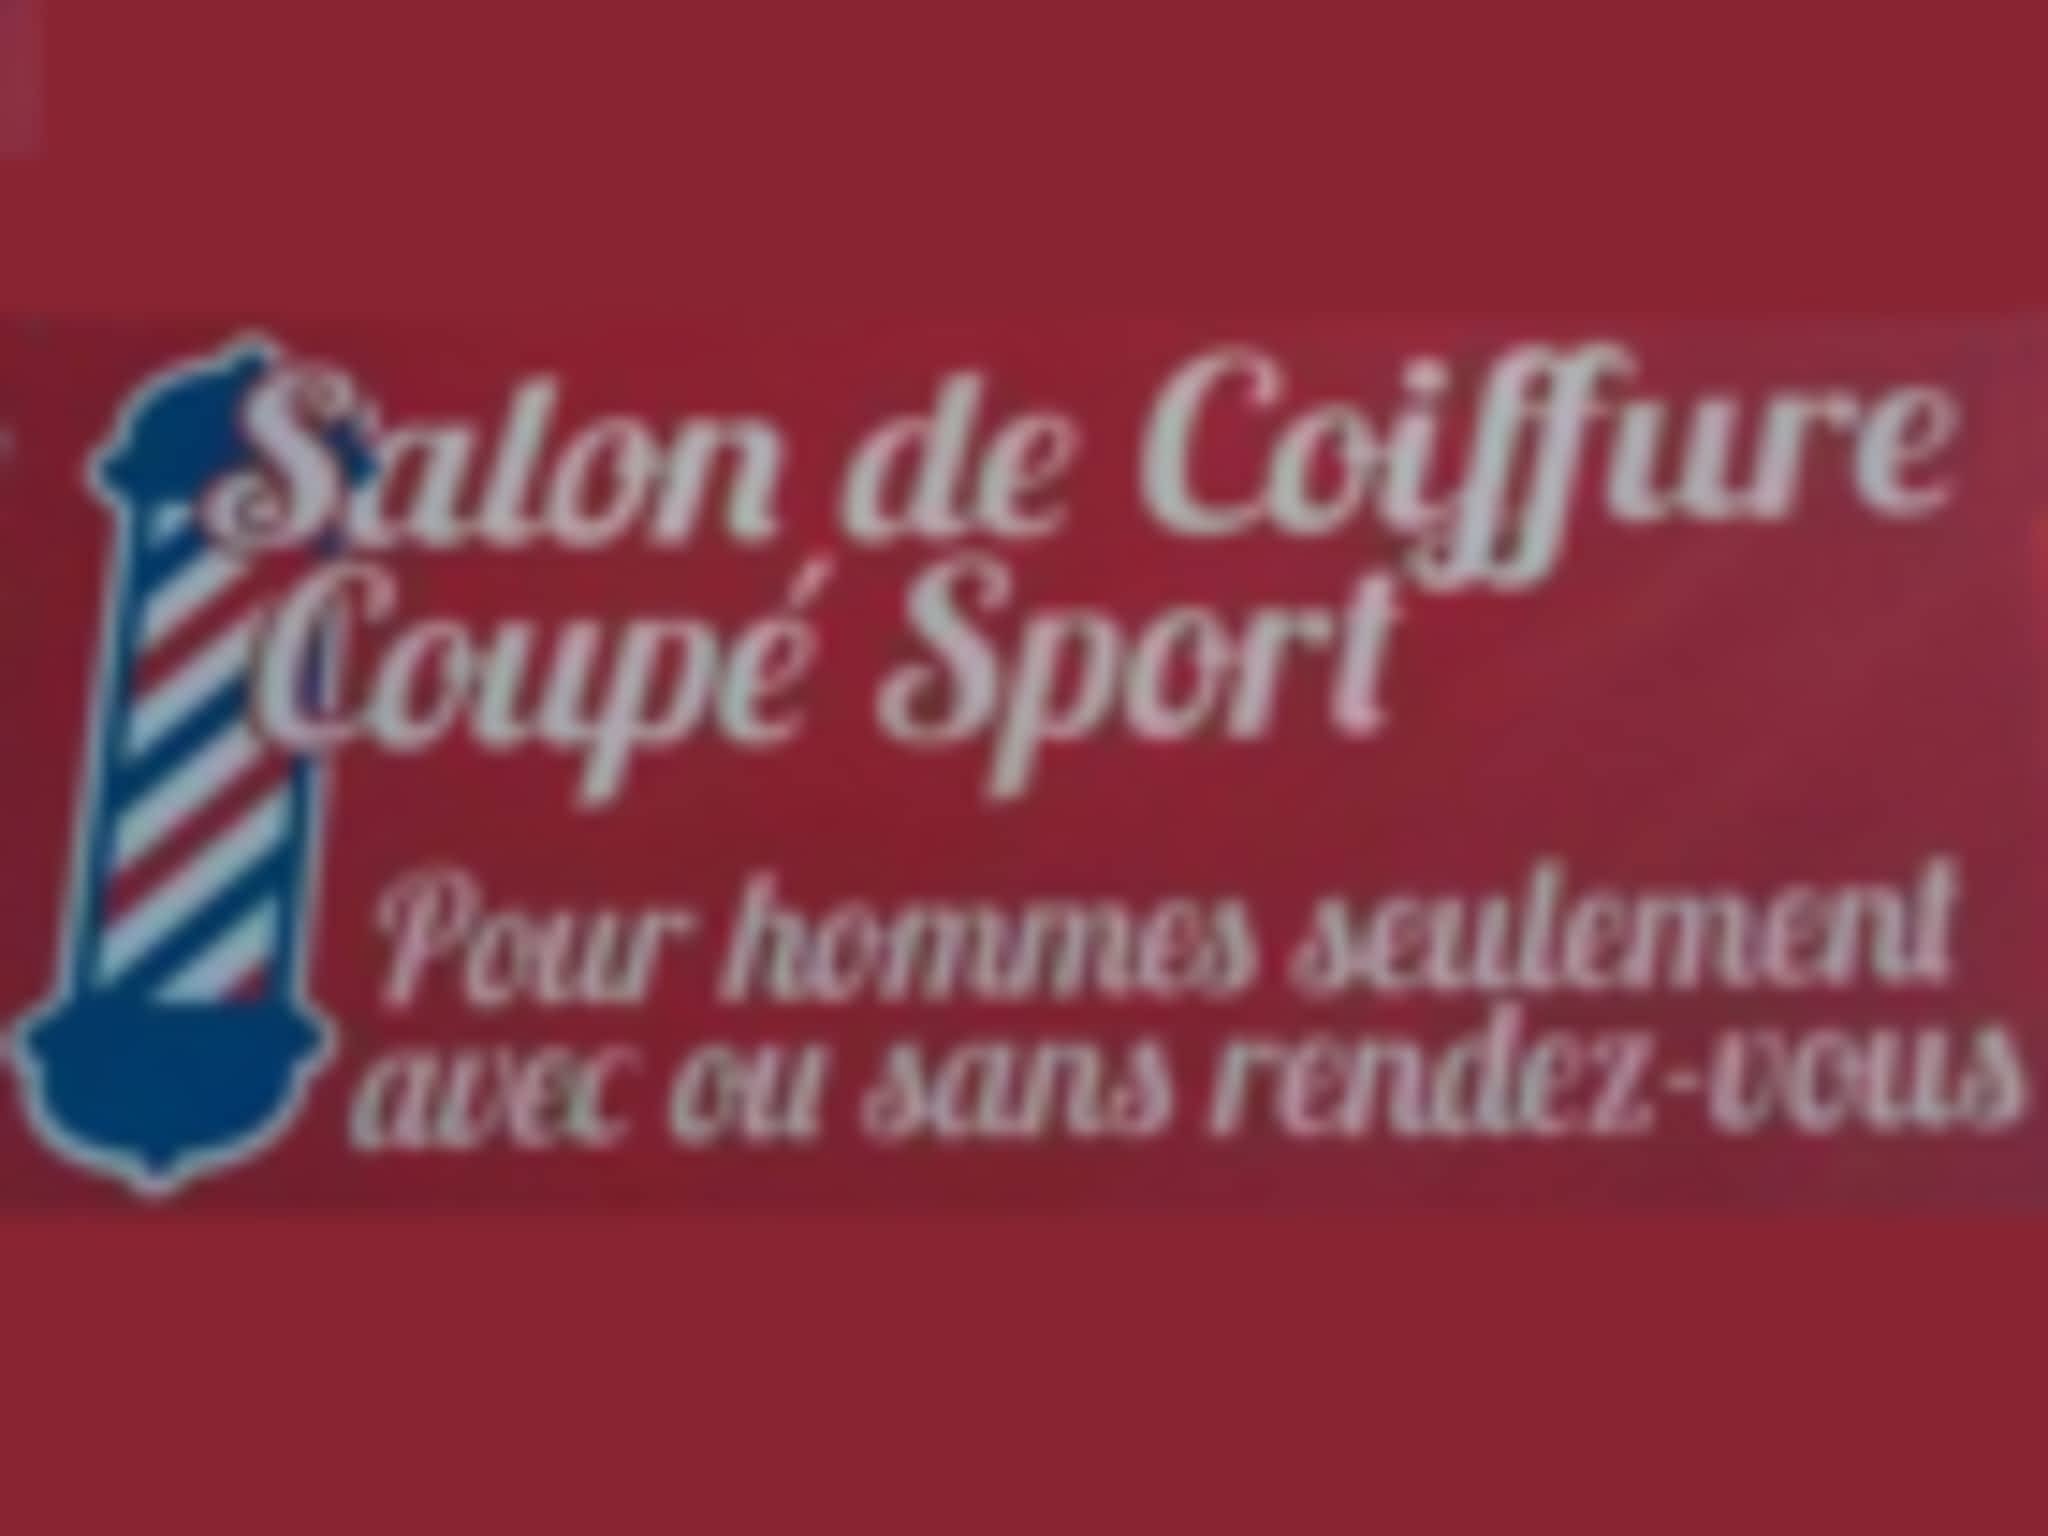 photo Salon De Coiffure Coupe Sport Inc